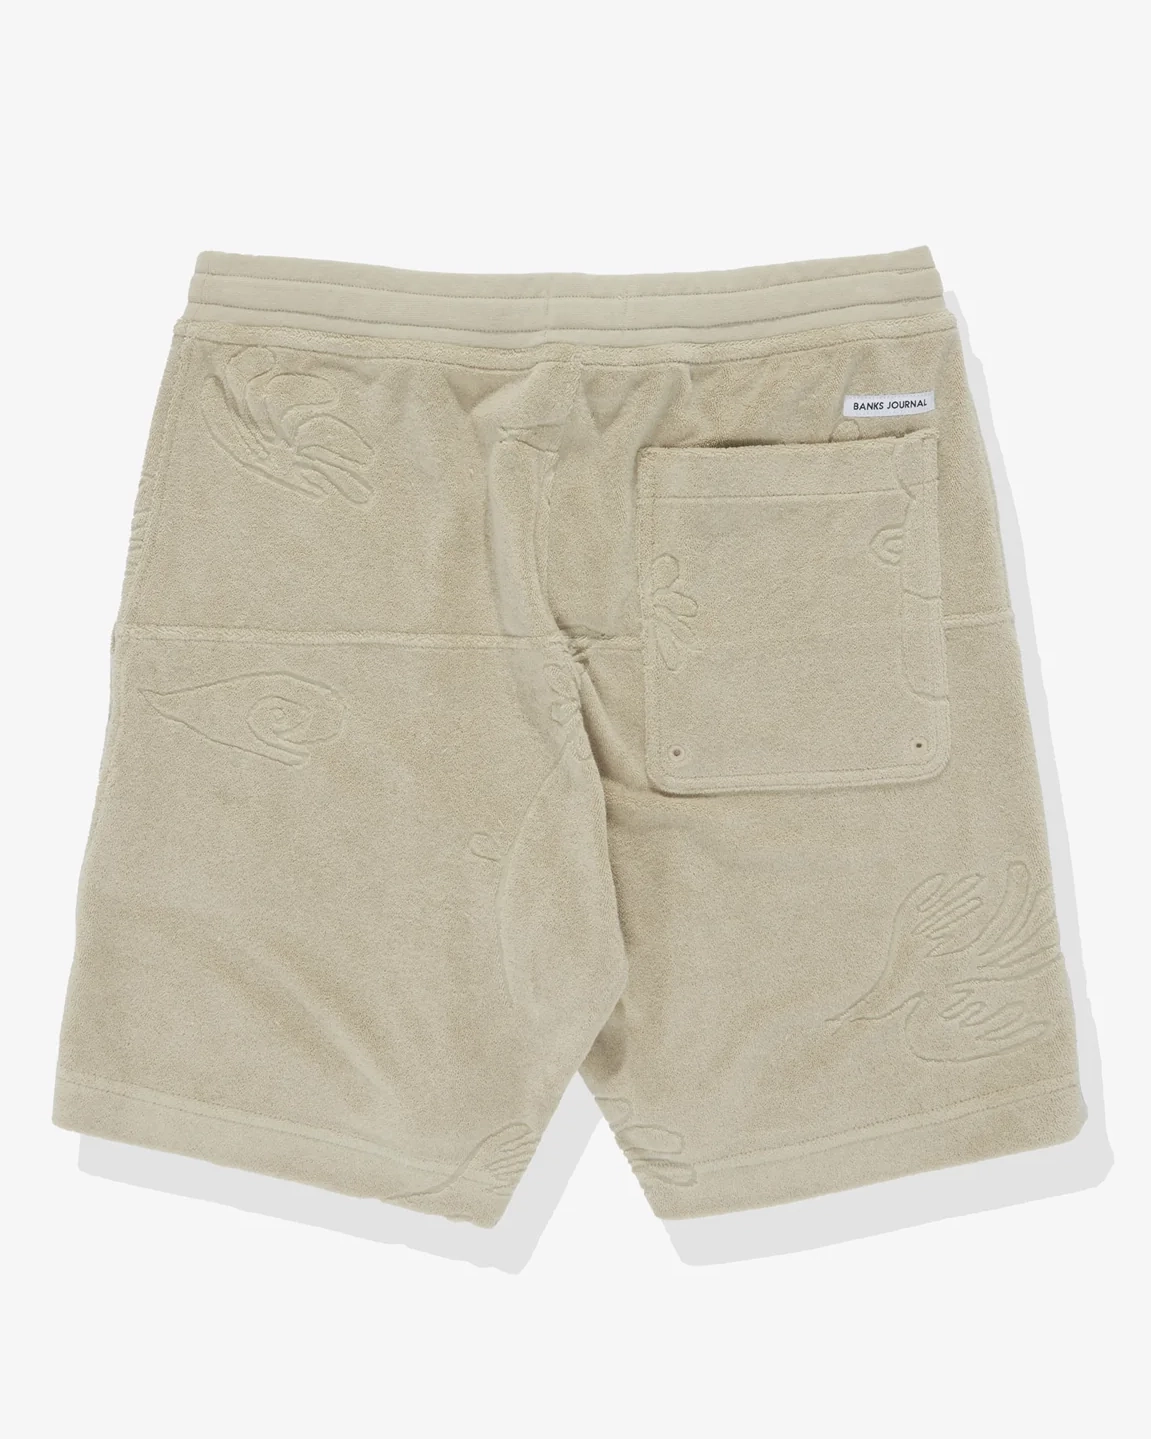 Shorts Ollie - Fern - S